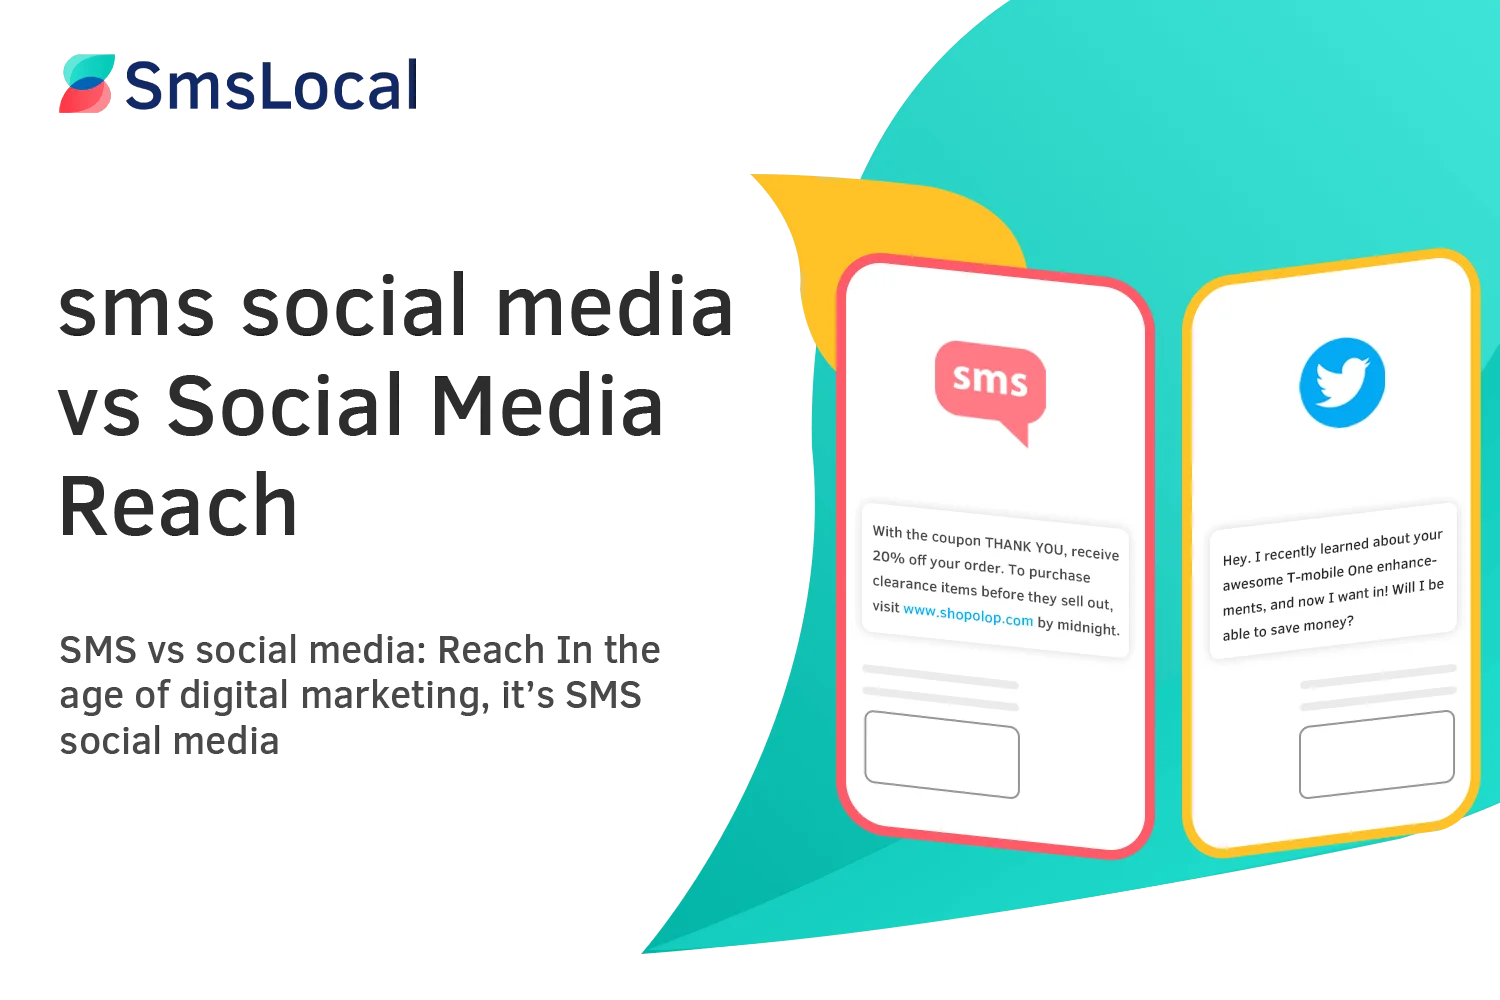 sms-social-media-vs-Social-Media-Reach-1 (1)